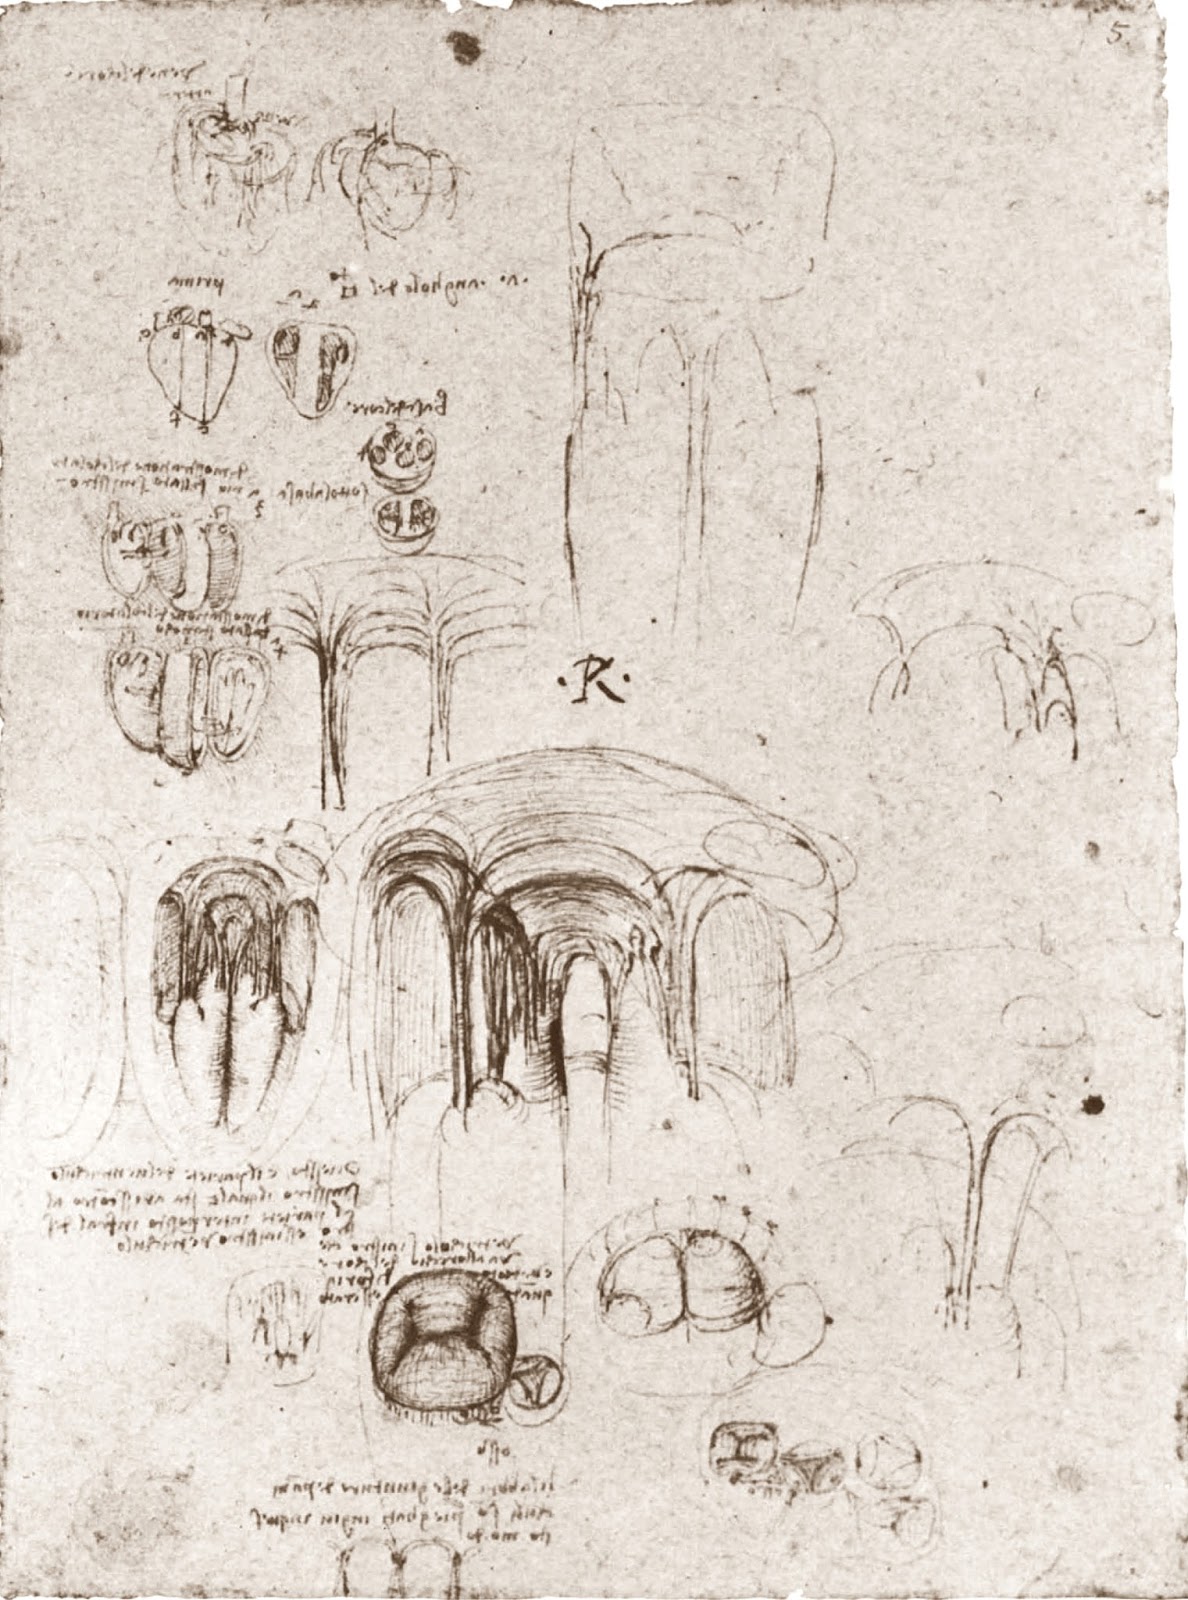 Leonardo+da+Vinci-1452-1519 (810).jpg